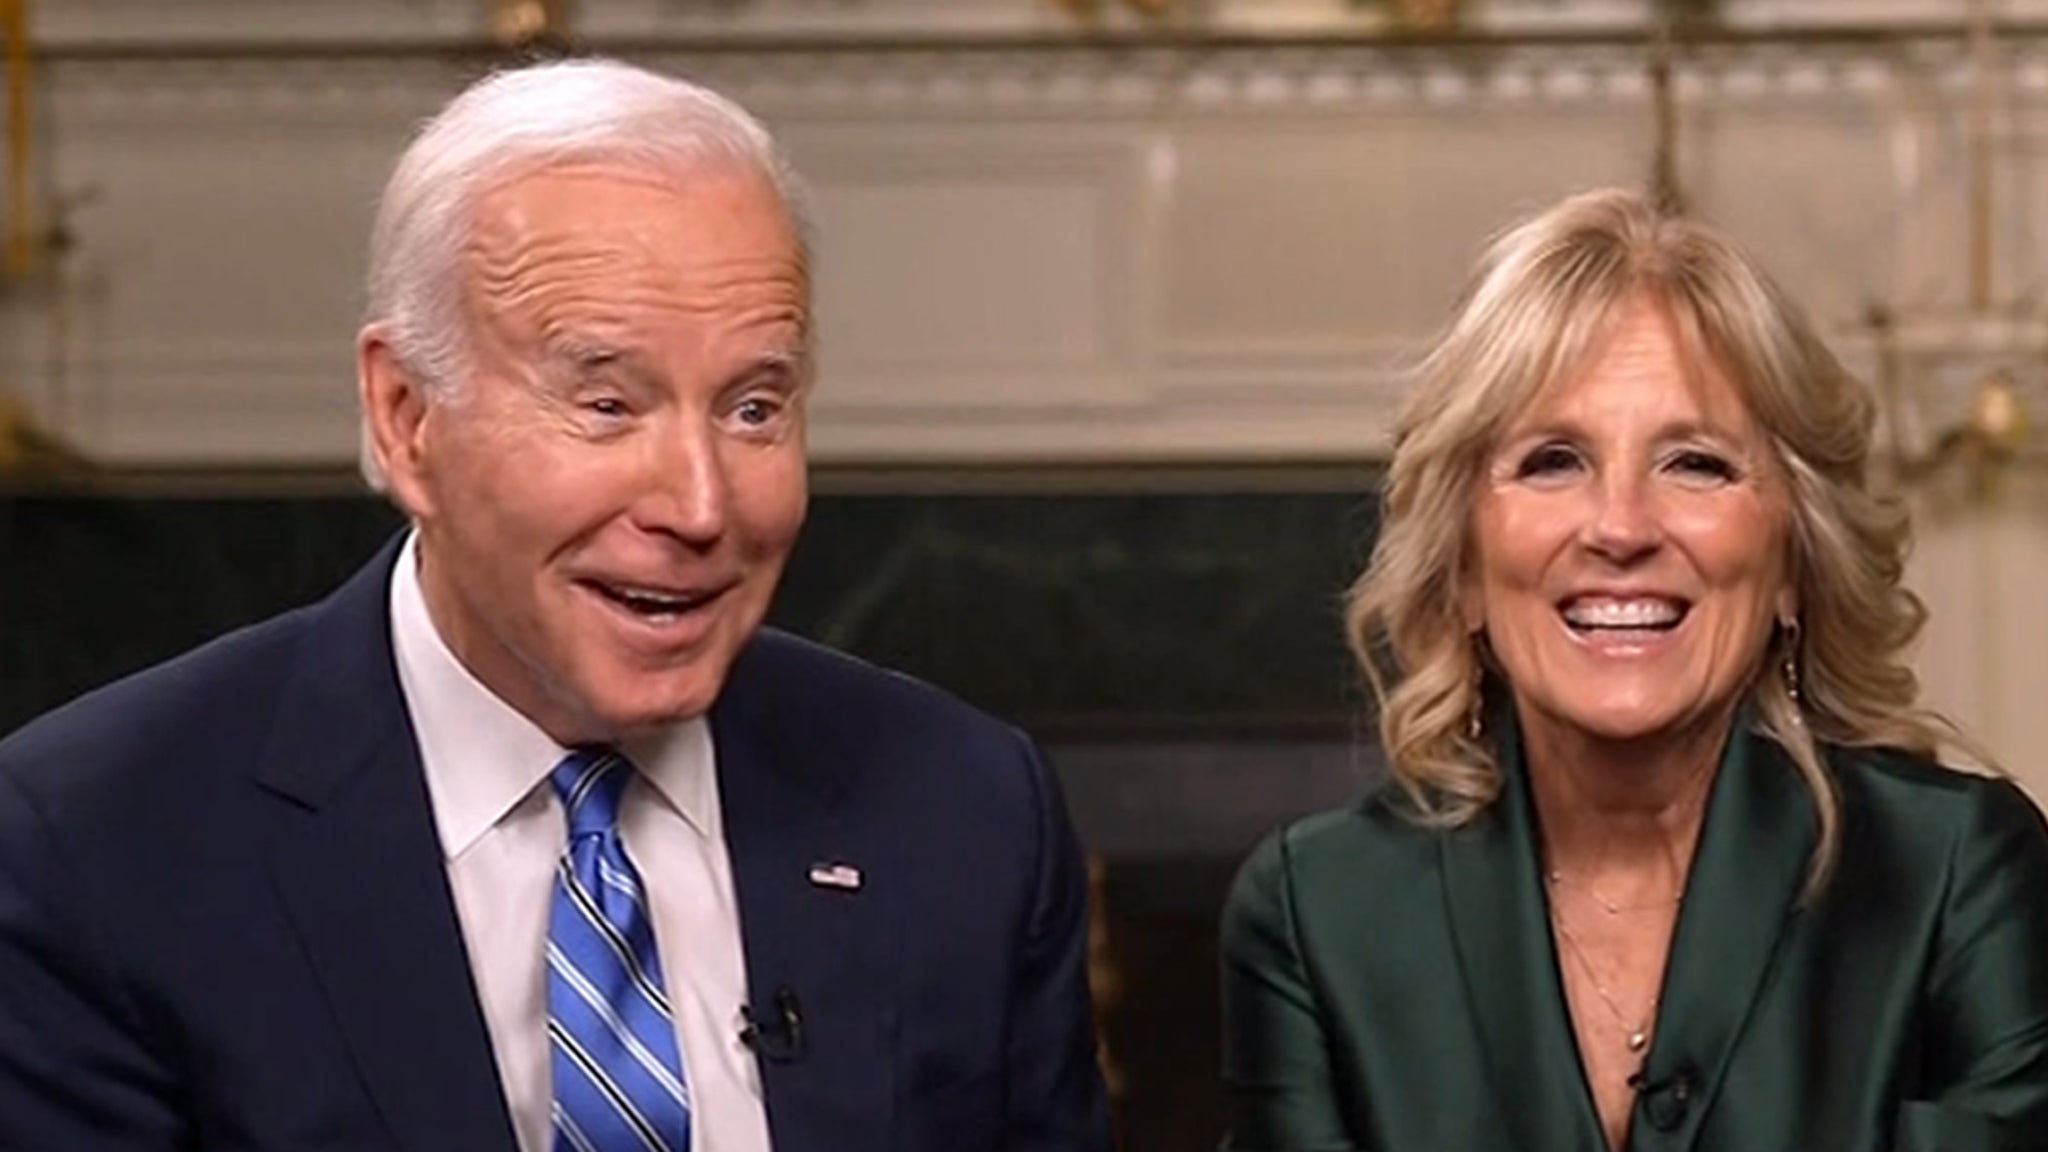 President Biden talks to Drew Barrymore about Jill's five-time proposal